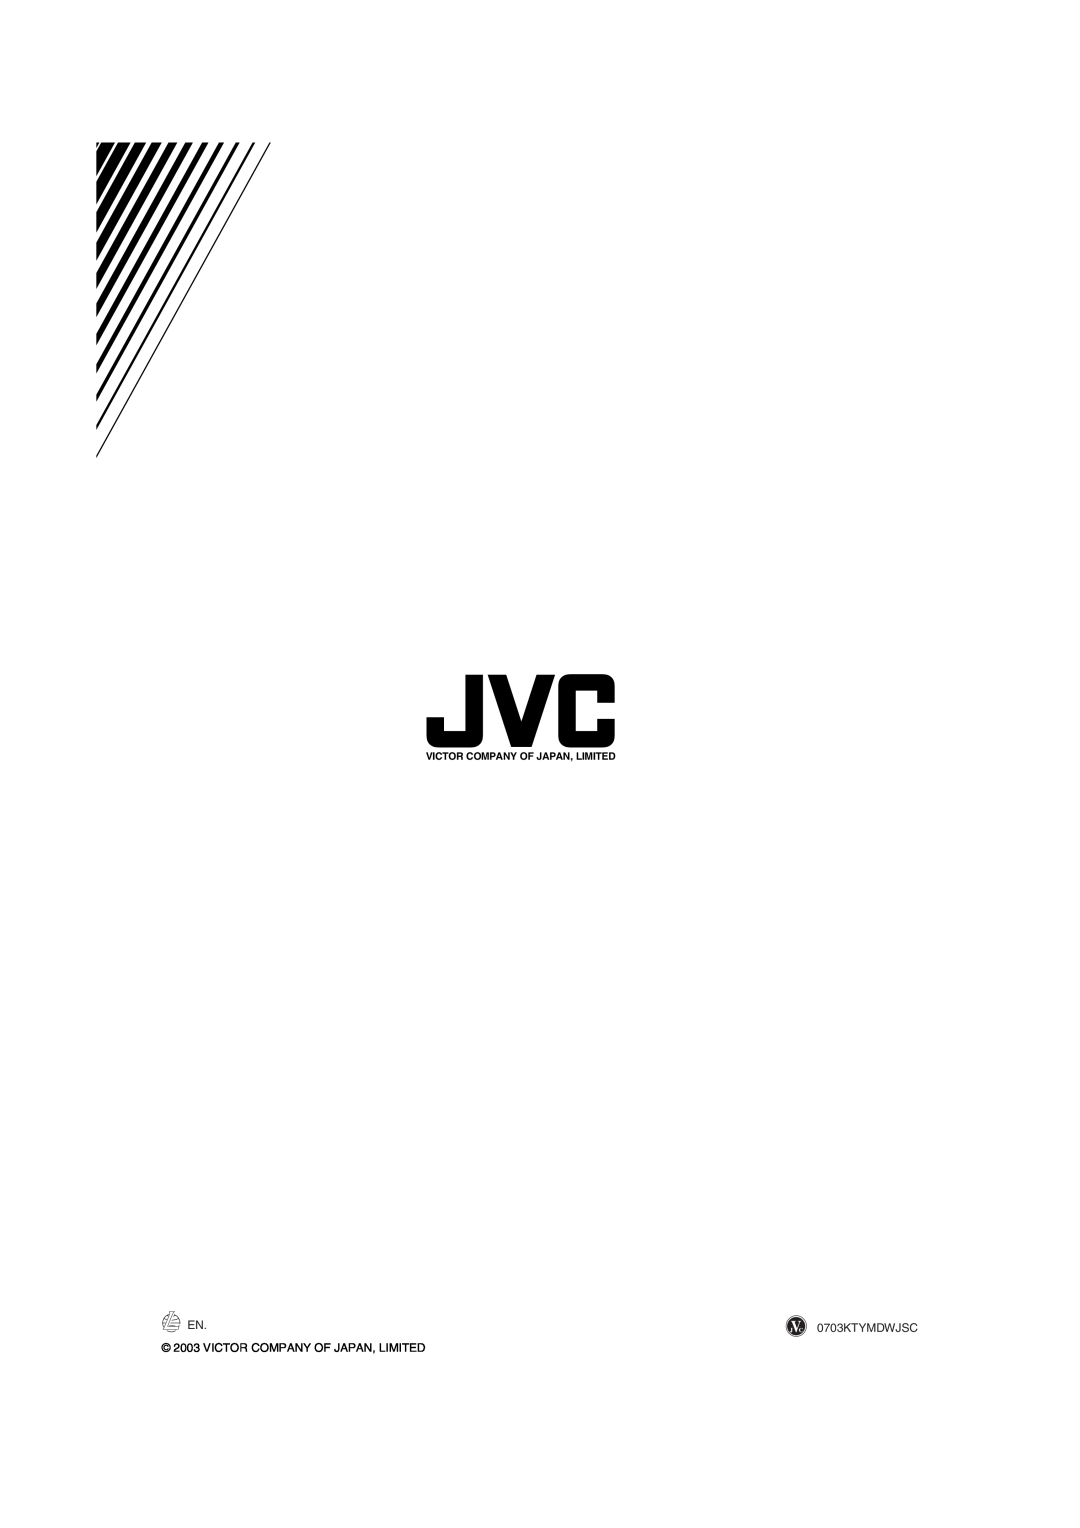 JVC XV-NP1SL manual 0703KTYMDWJSC, Victor Company Of Japan, Limited 